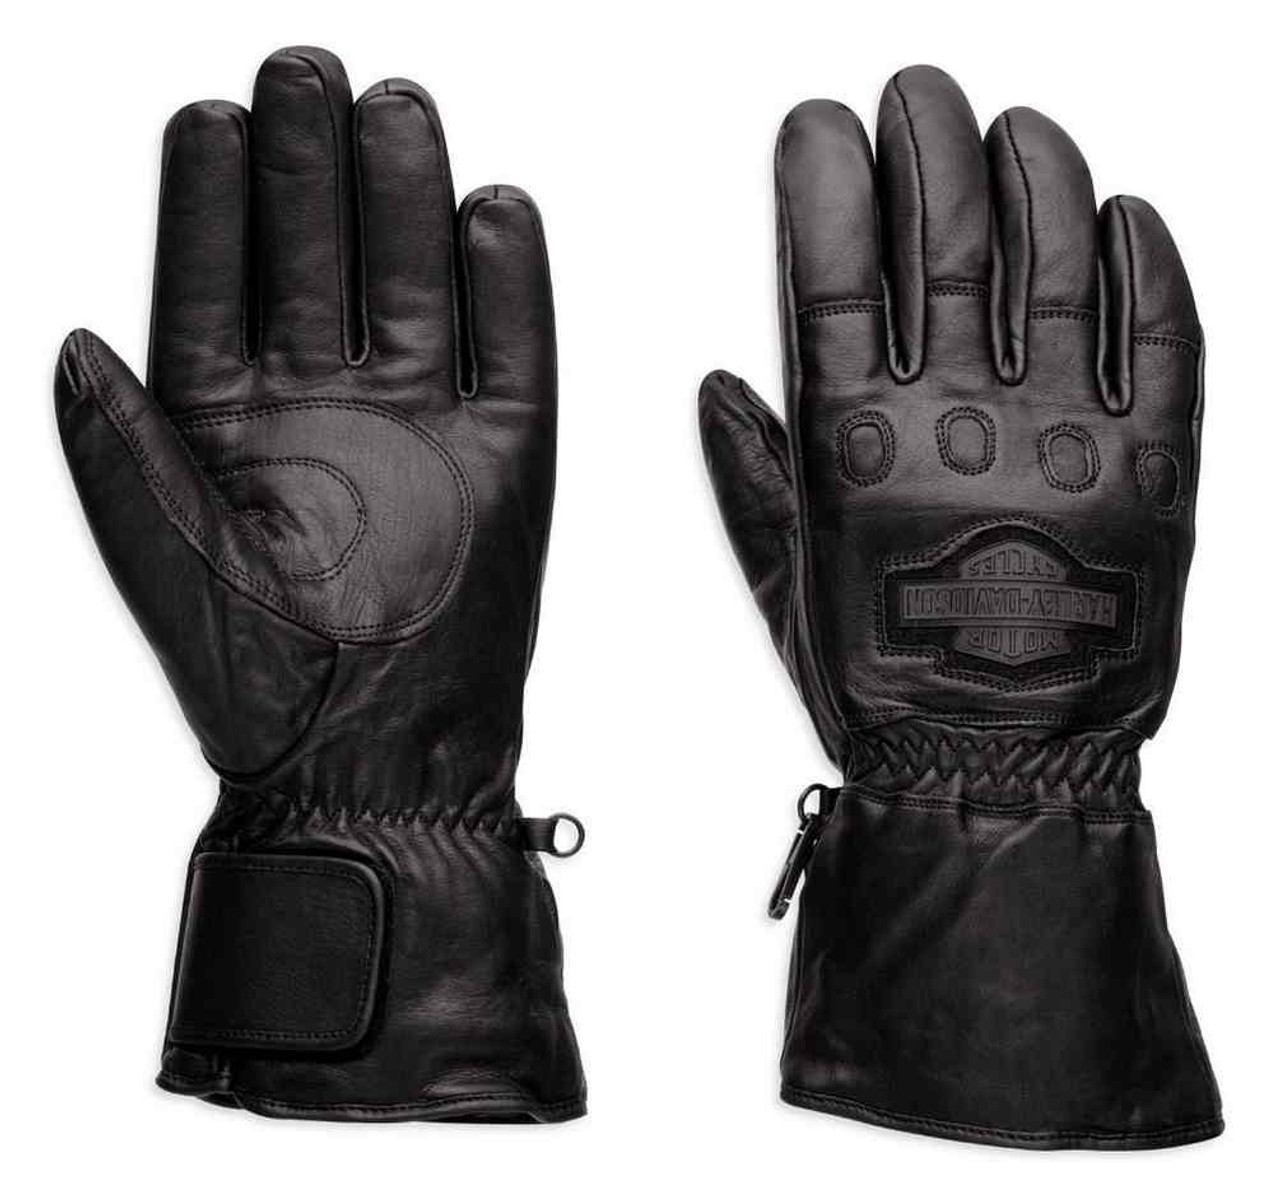 Harley Davidson Men S Windshielder Gauntlet Leather Gloves 98158 95vm Wisconsin Harley Davidson